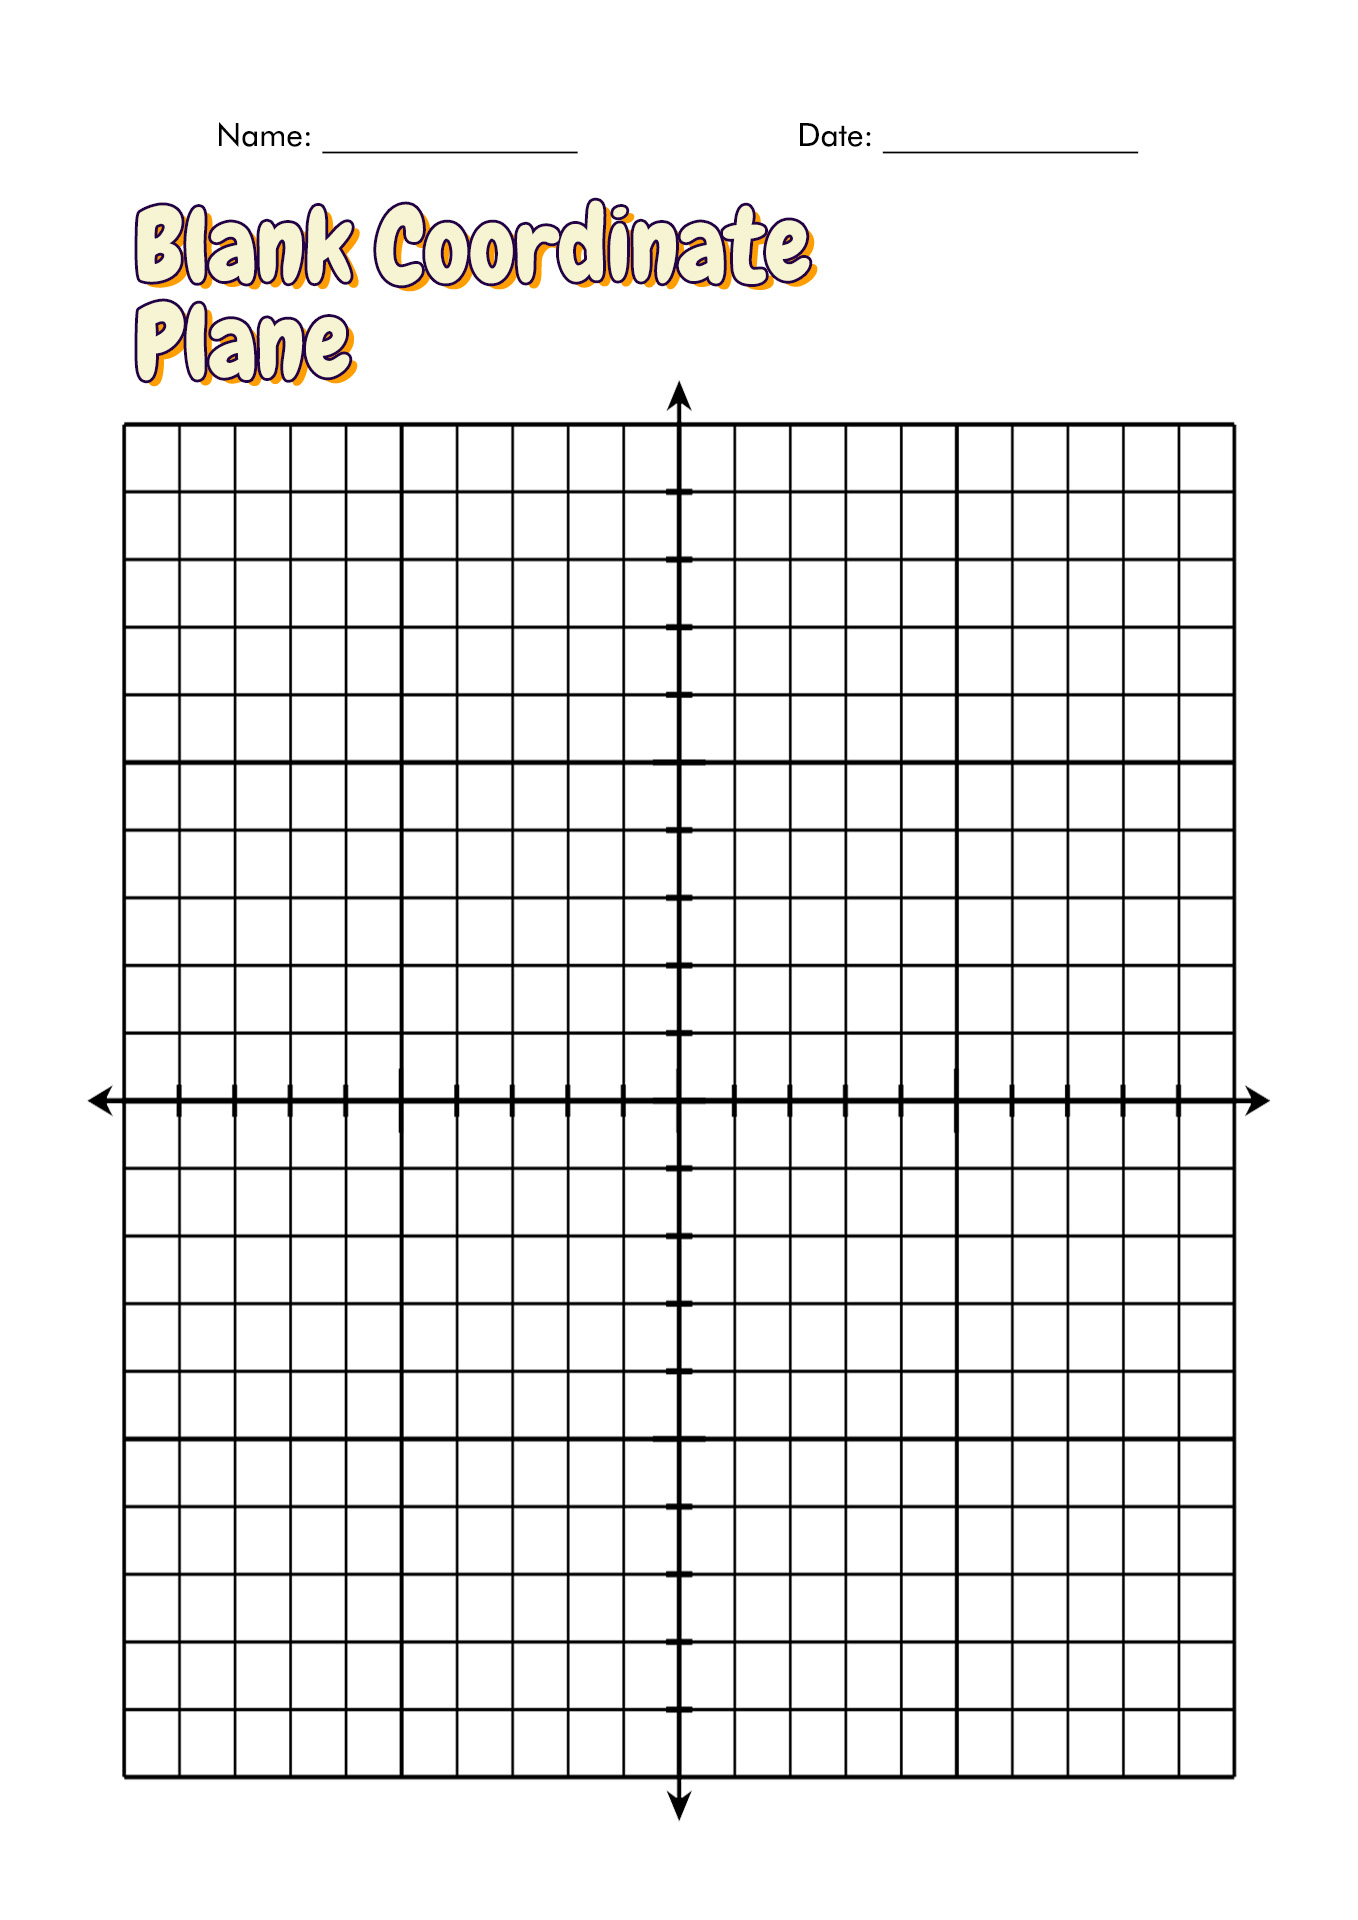 Blank Coordinate Plane Printable Image